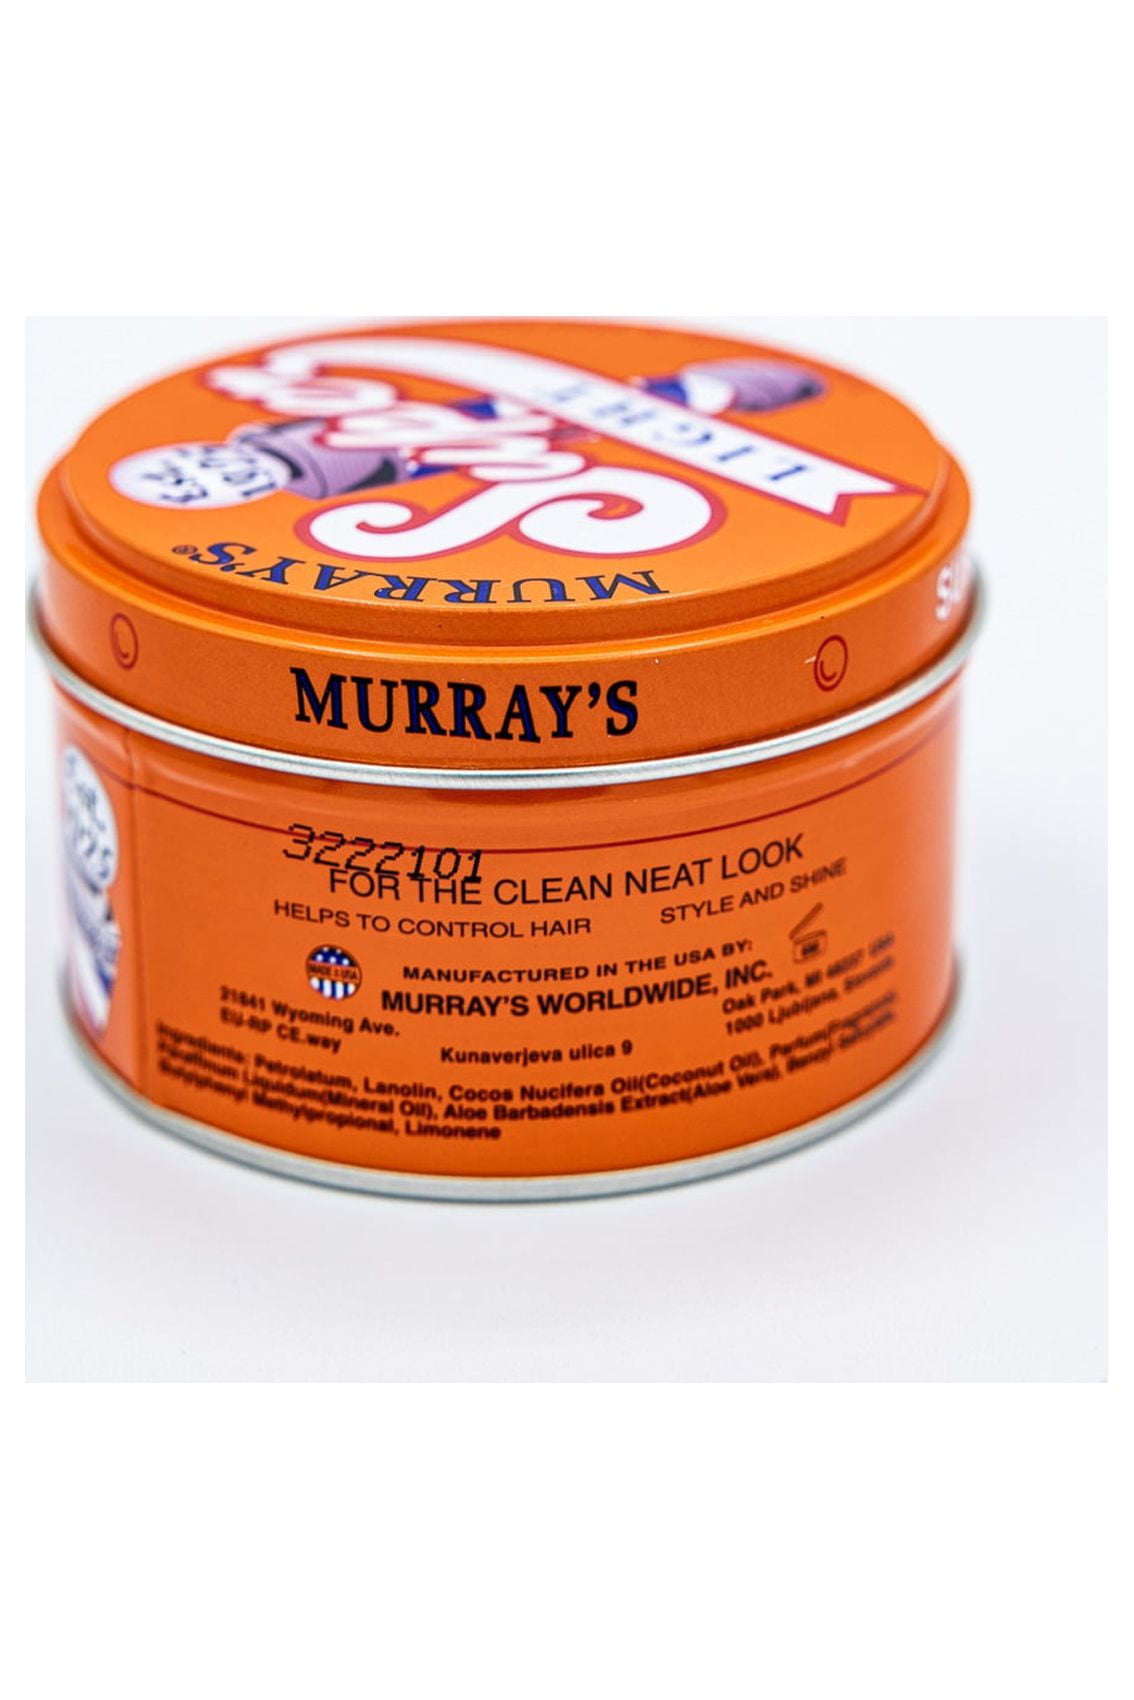 Murray's Superior Hair Dressing Pomade - 3 oz tin